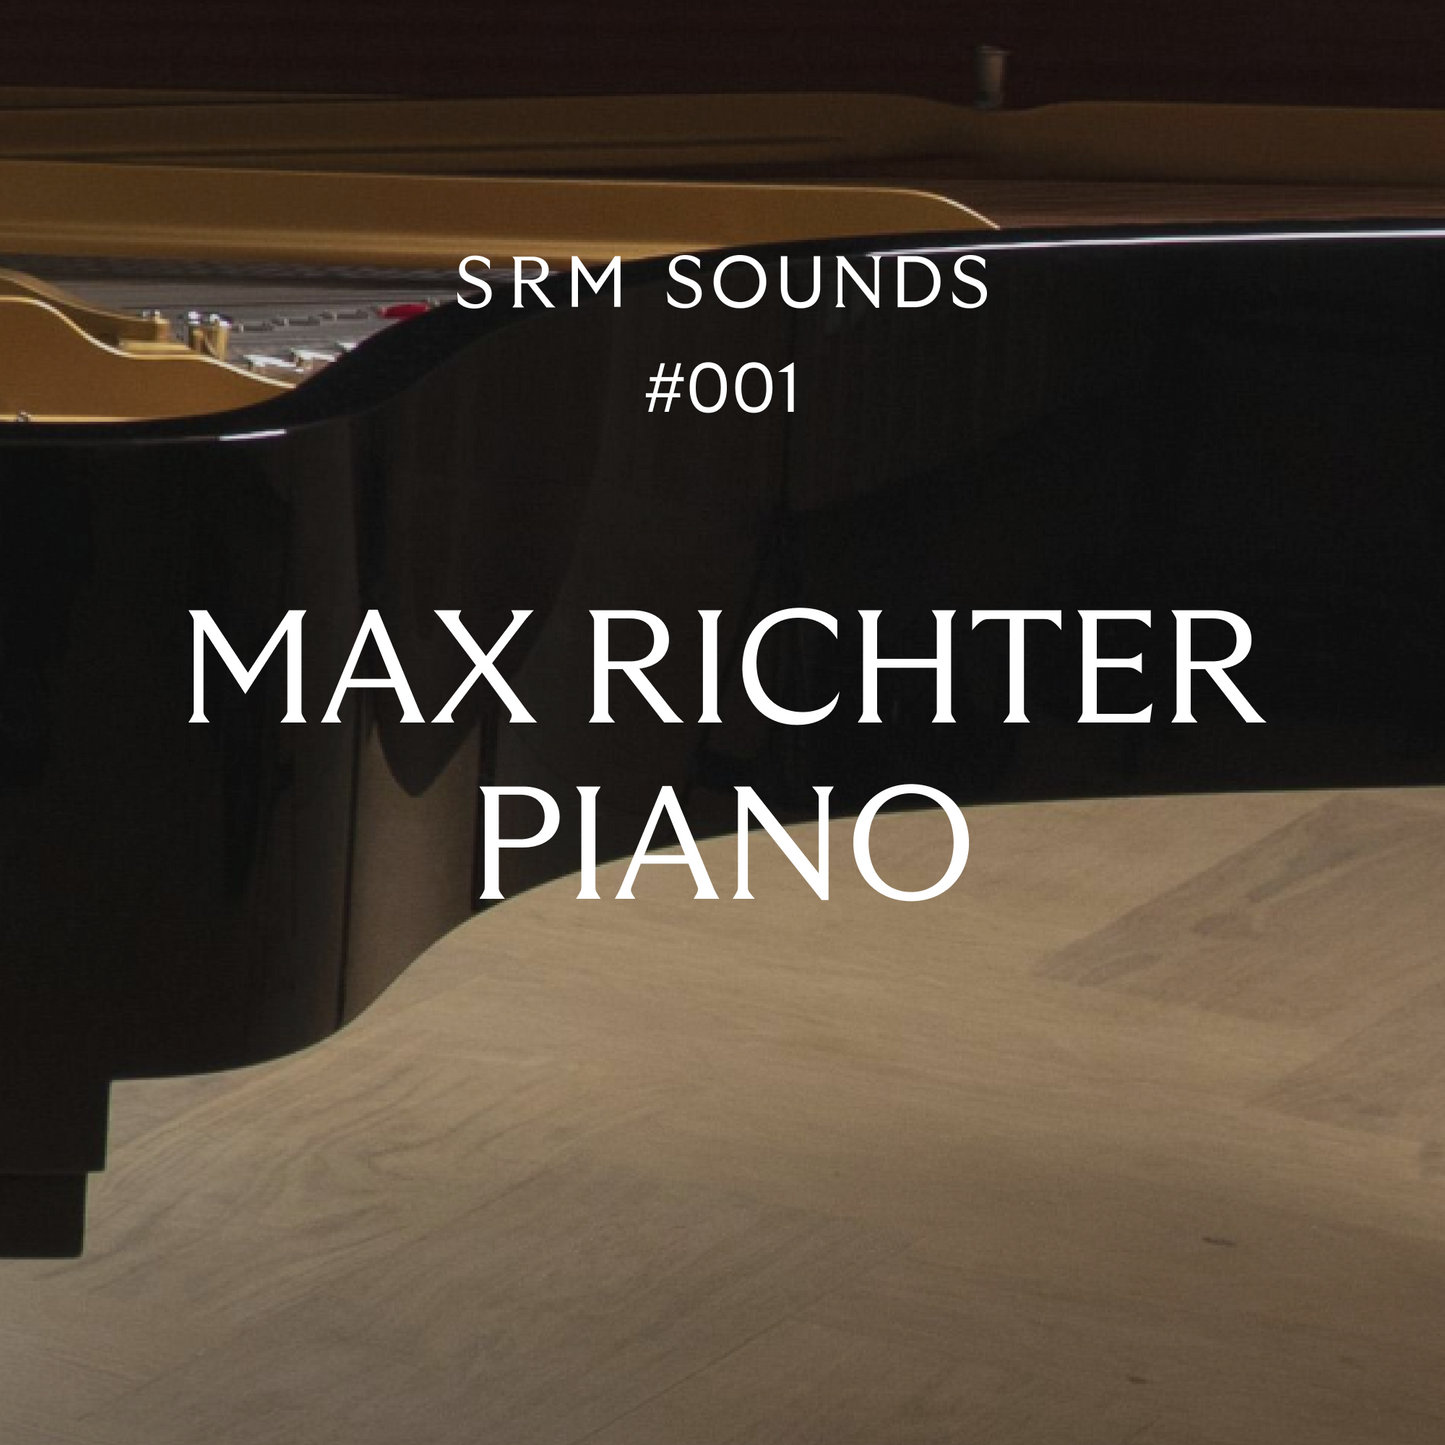 Max Richter Piano